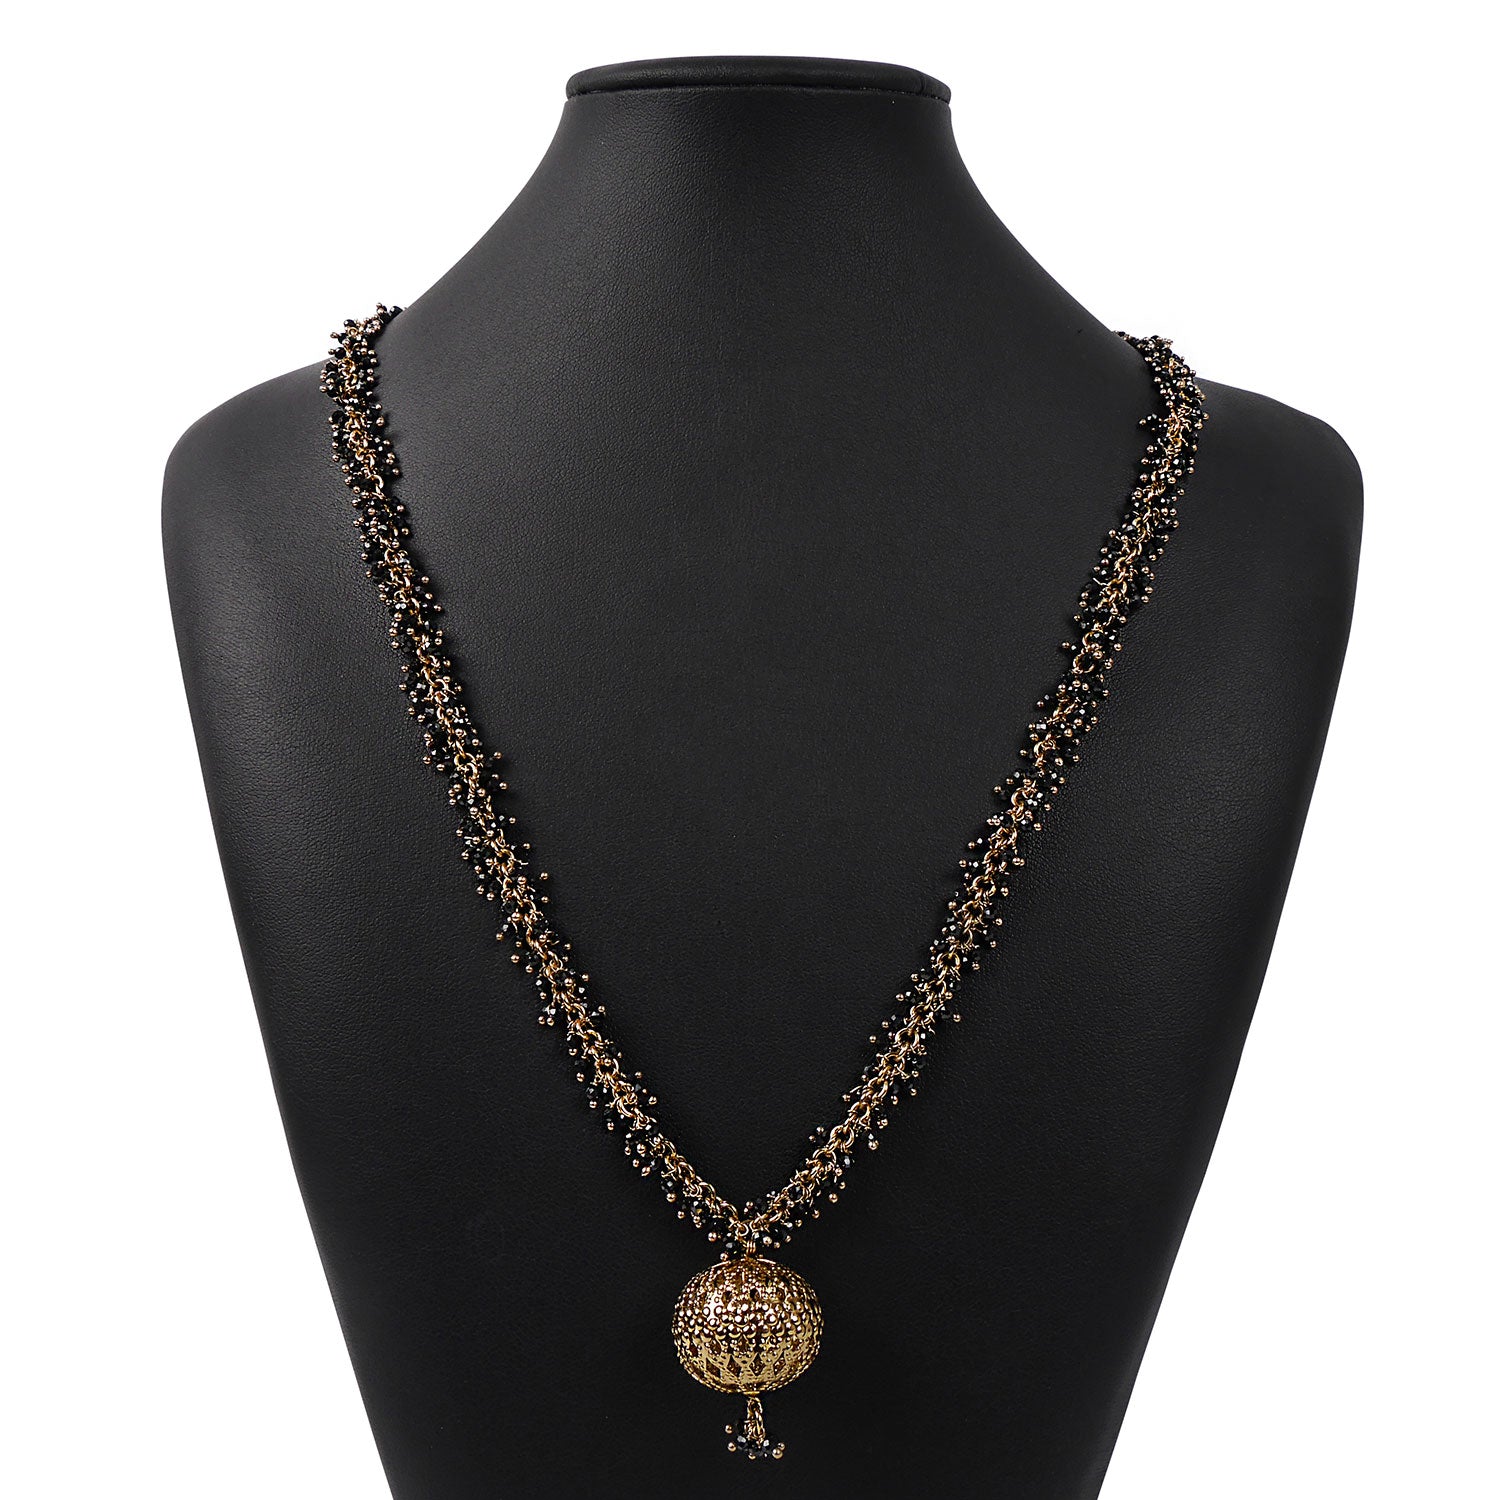 Kinara Cluster Necklace in Black